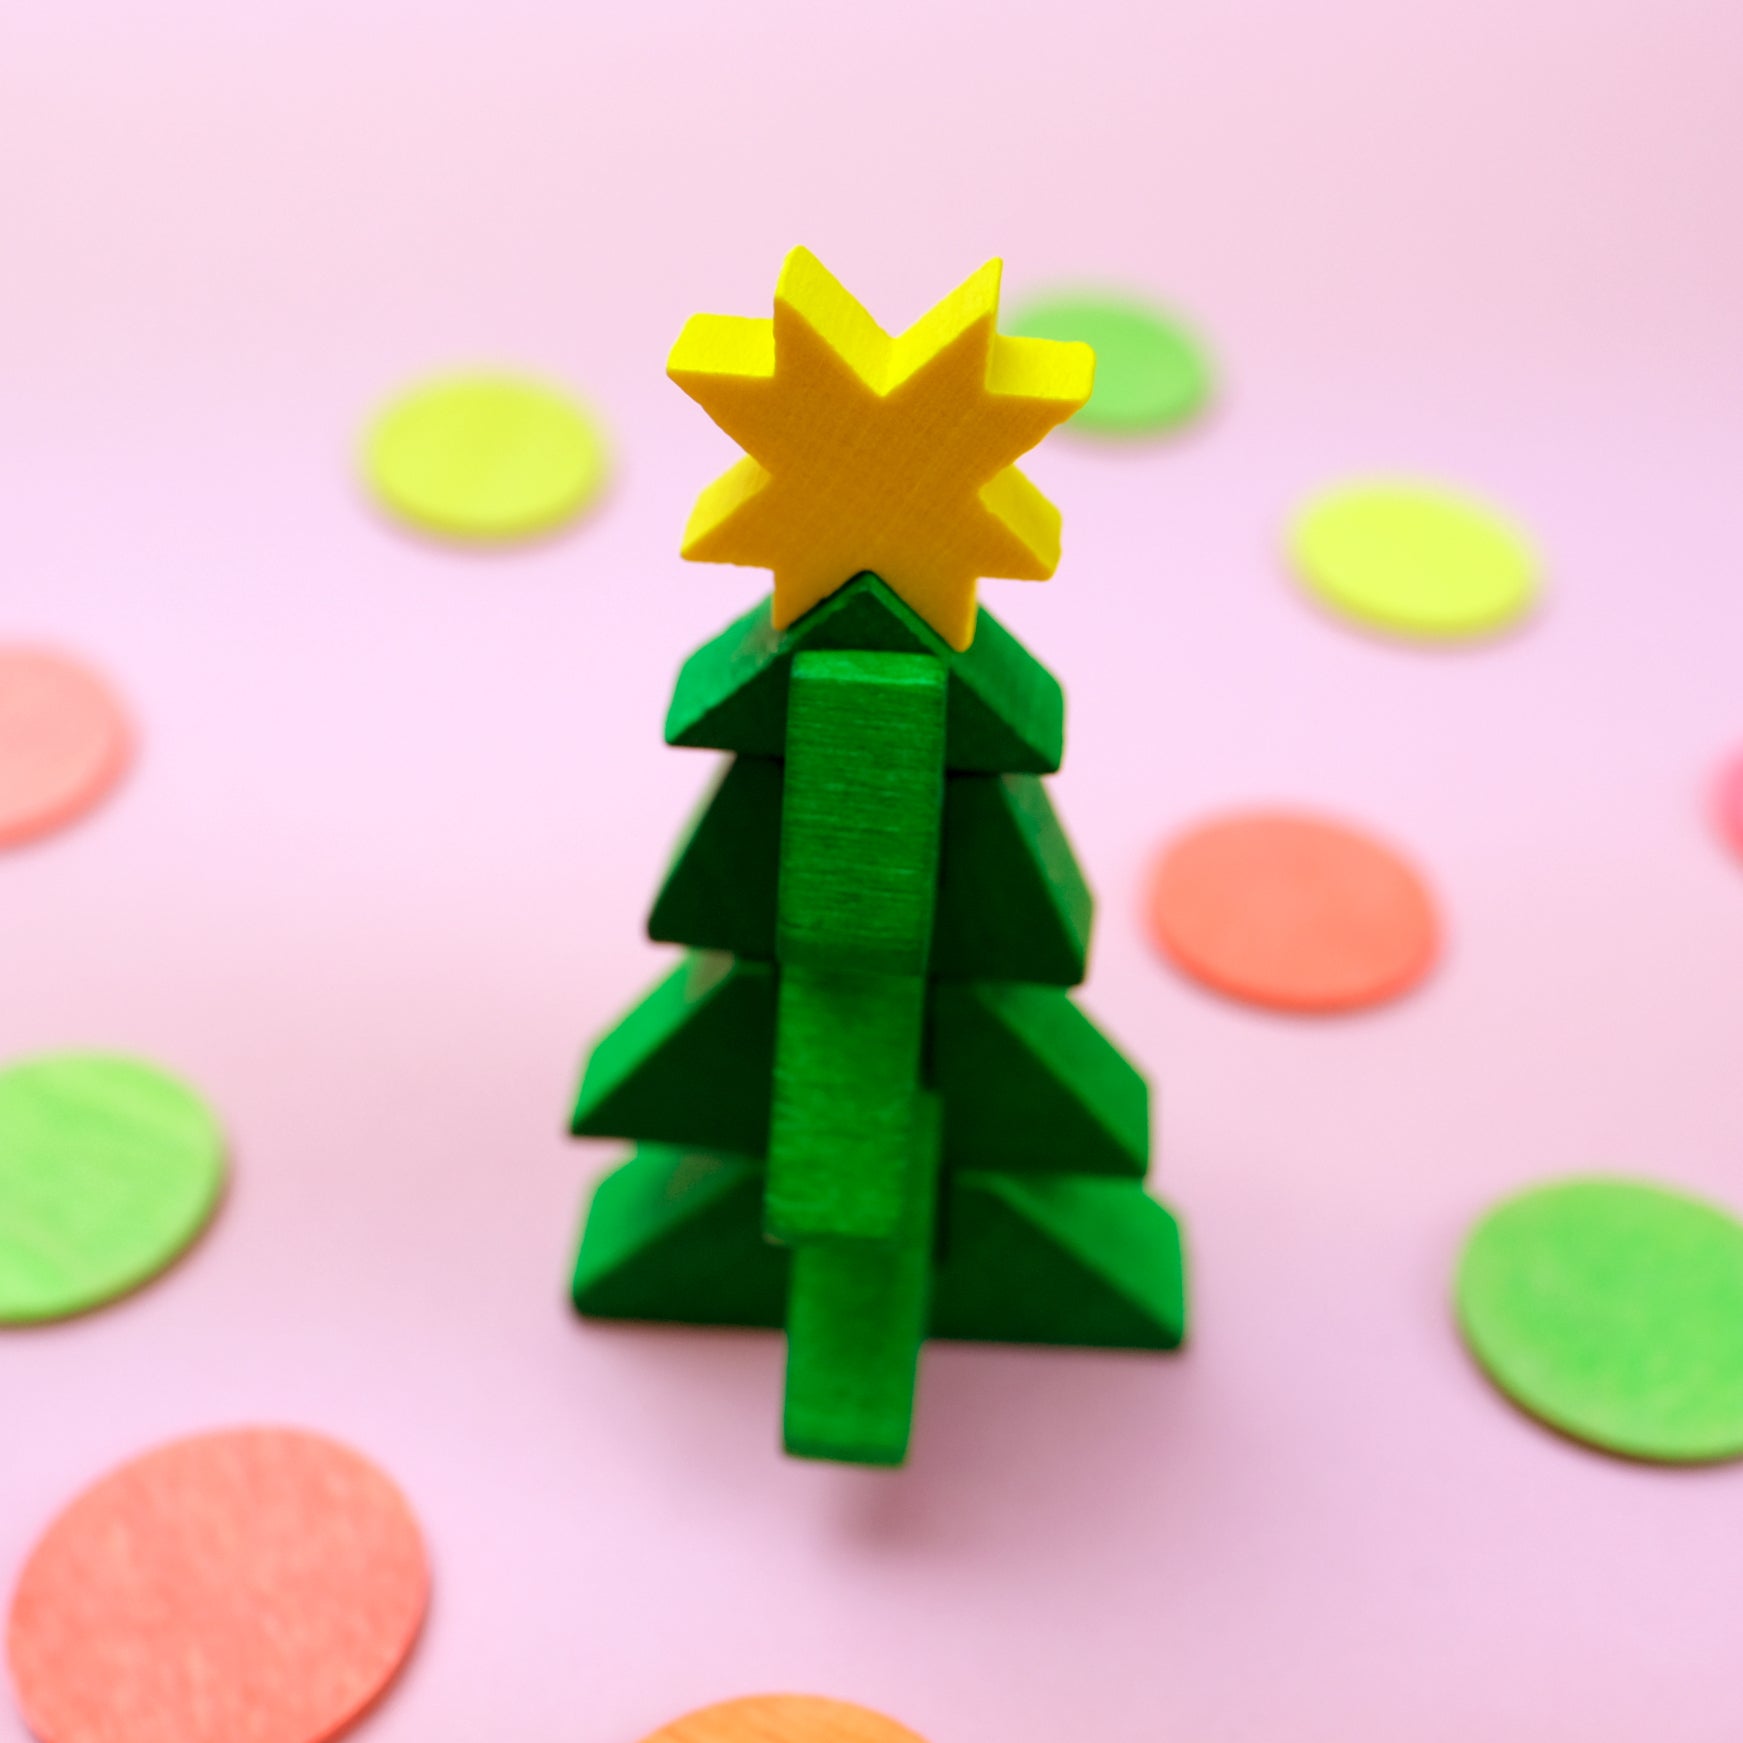 Mini Christmas tree in Matchbox